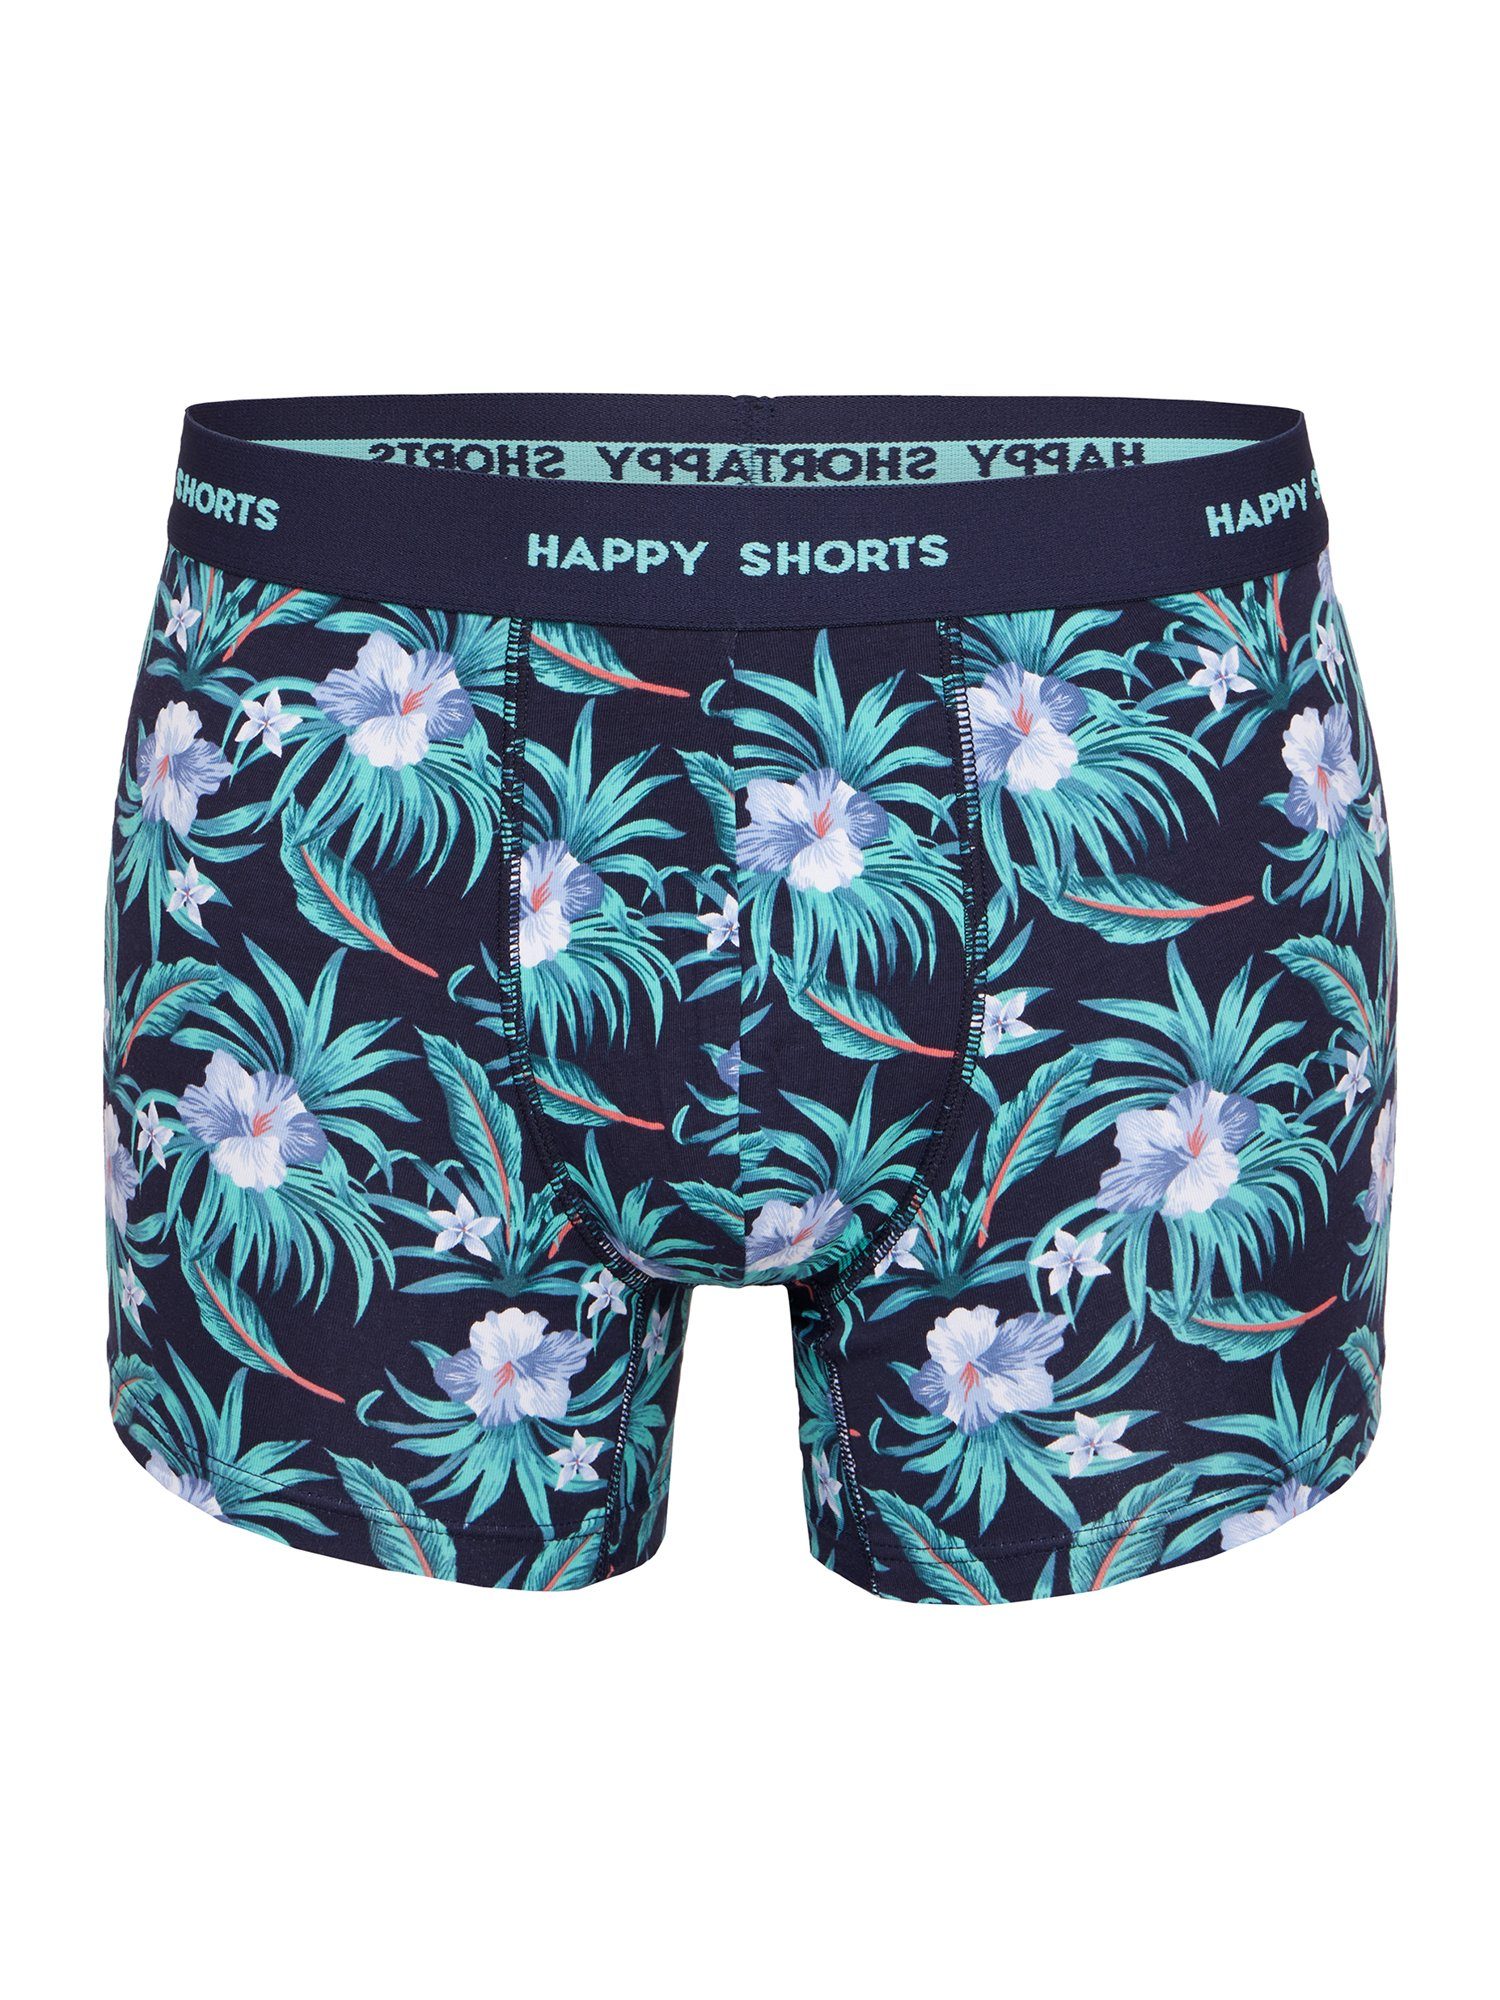 Retro-Boxer unterhose Motive Hawaii2 HAPPY (3-St) Retro SHORTS männer Pants